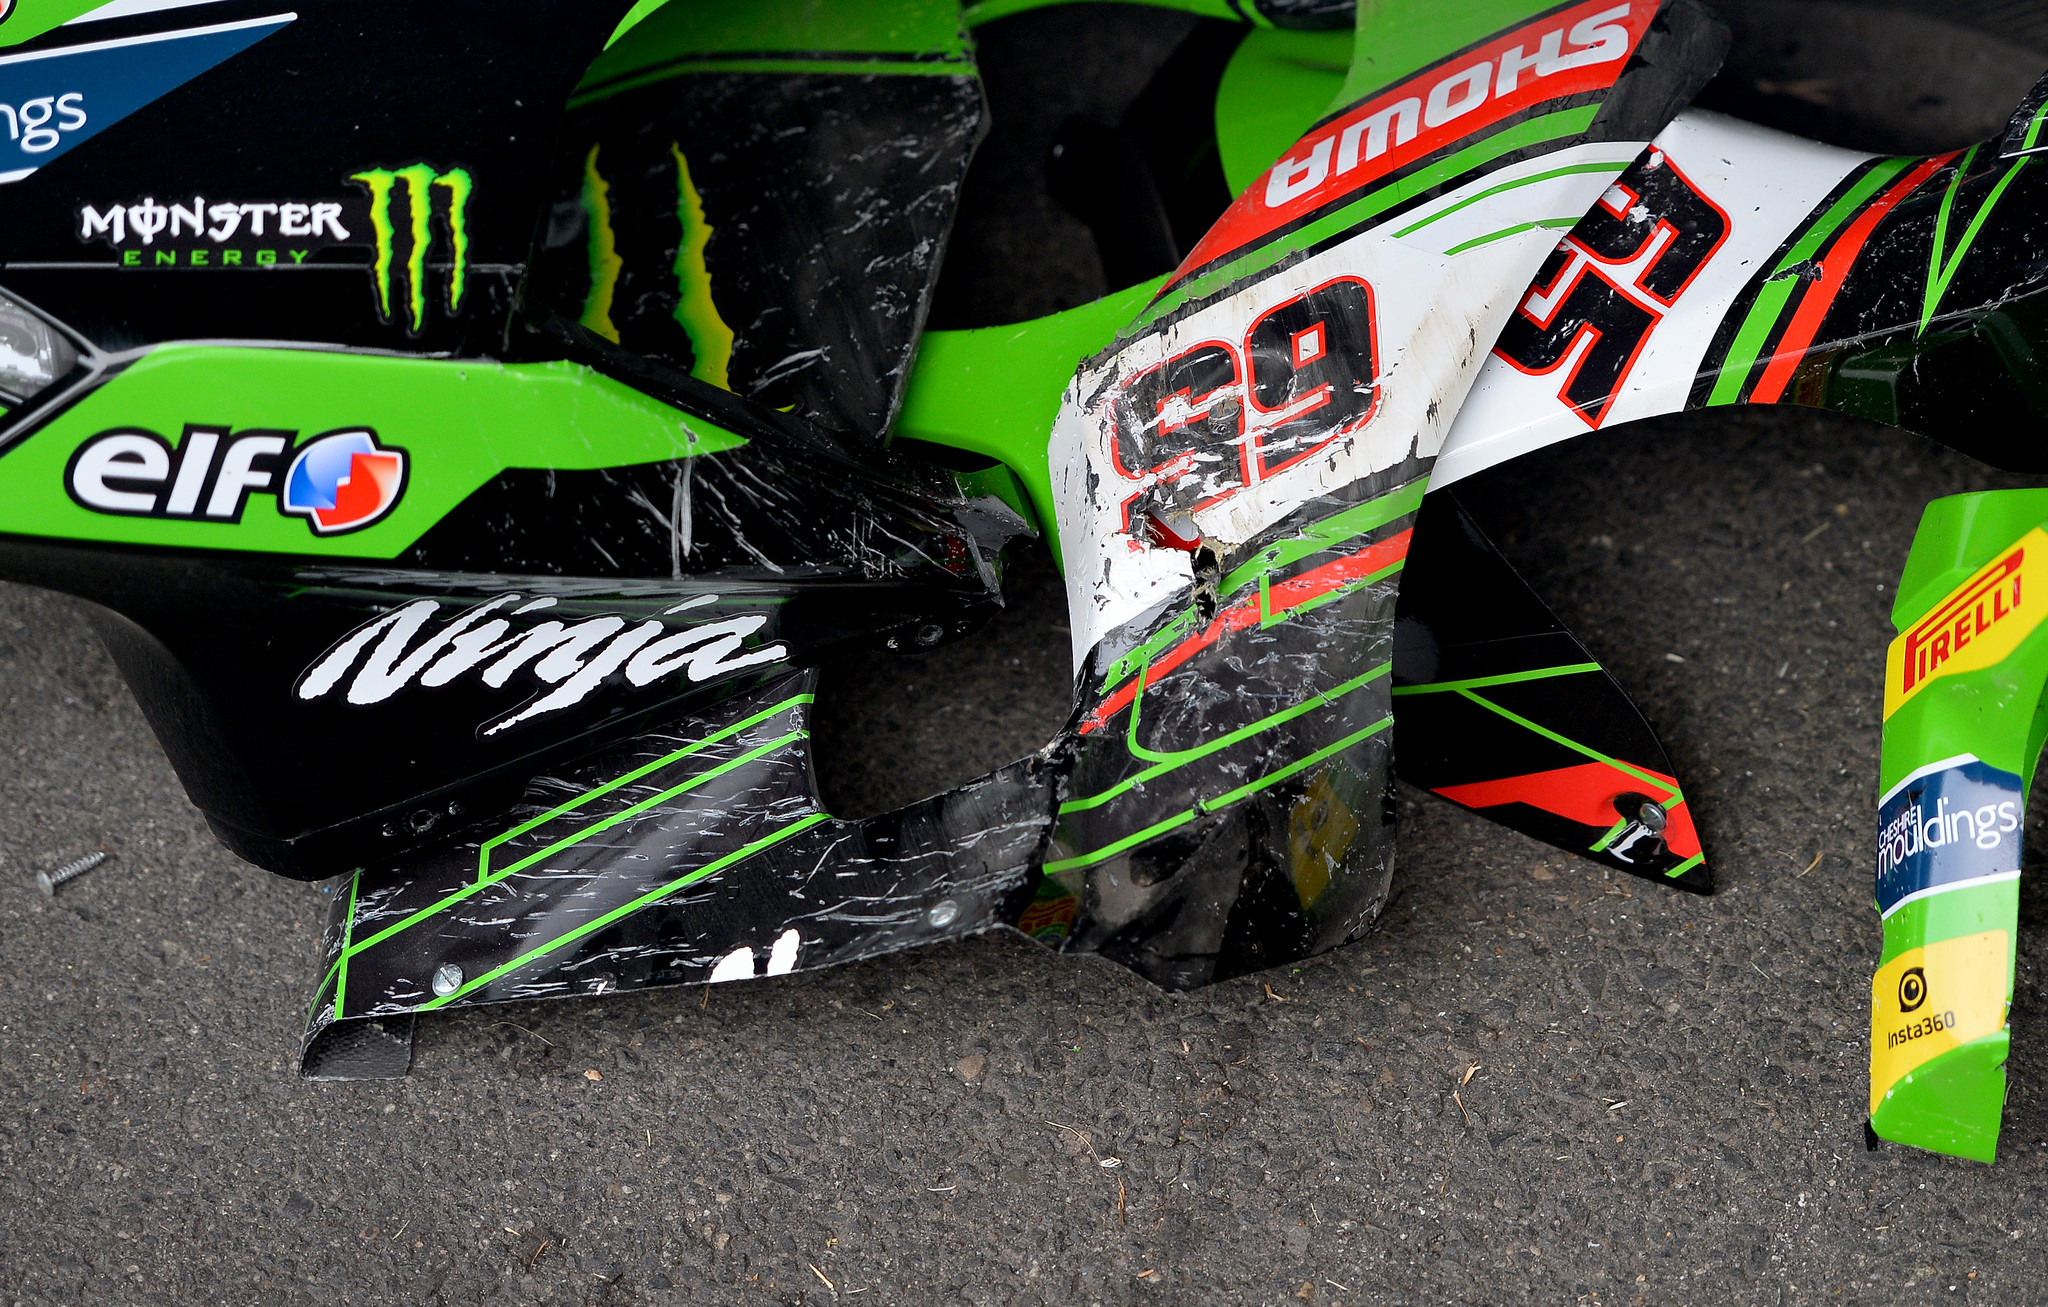 Jonathan Rea's crash damage